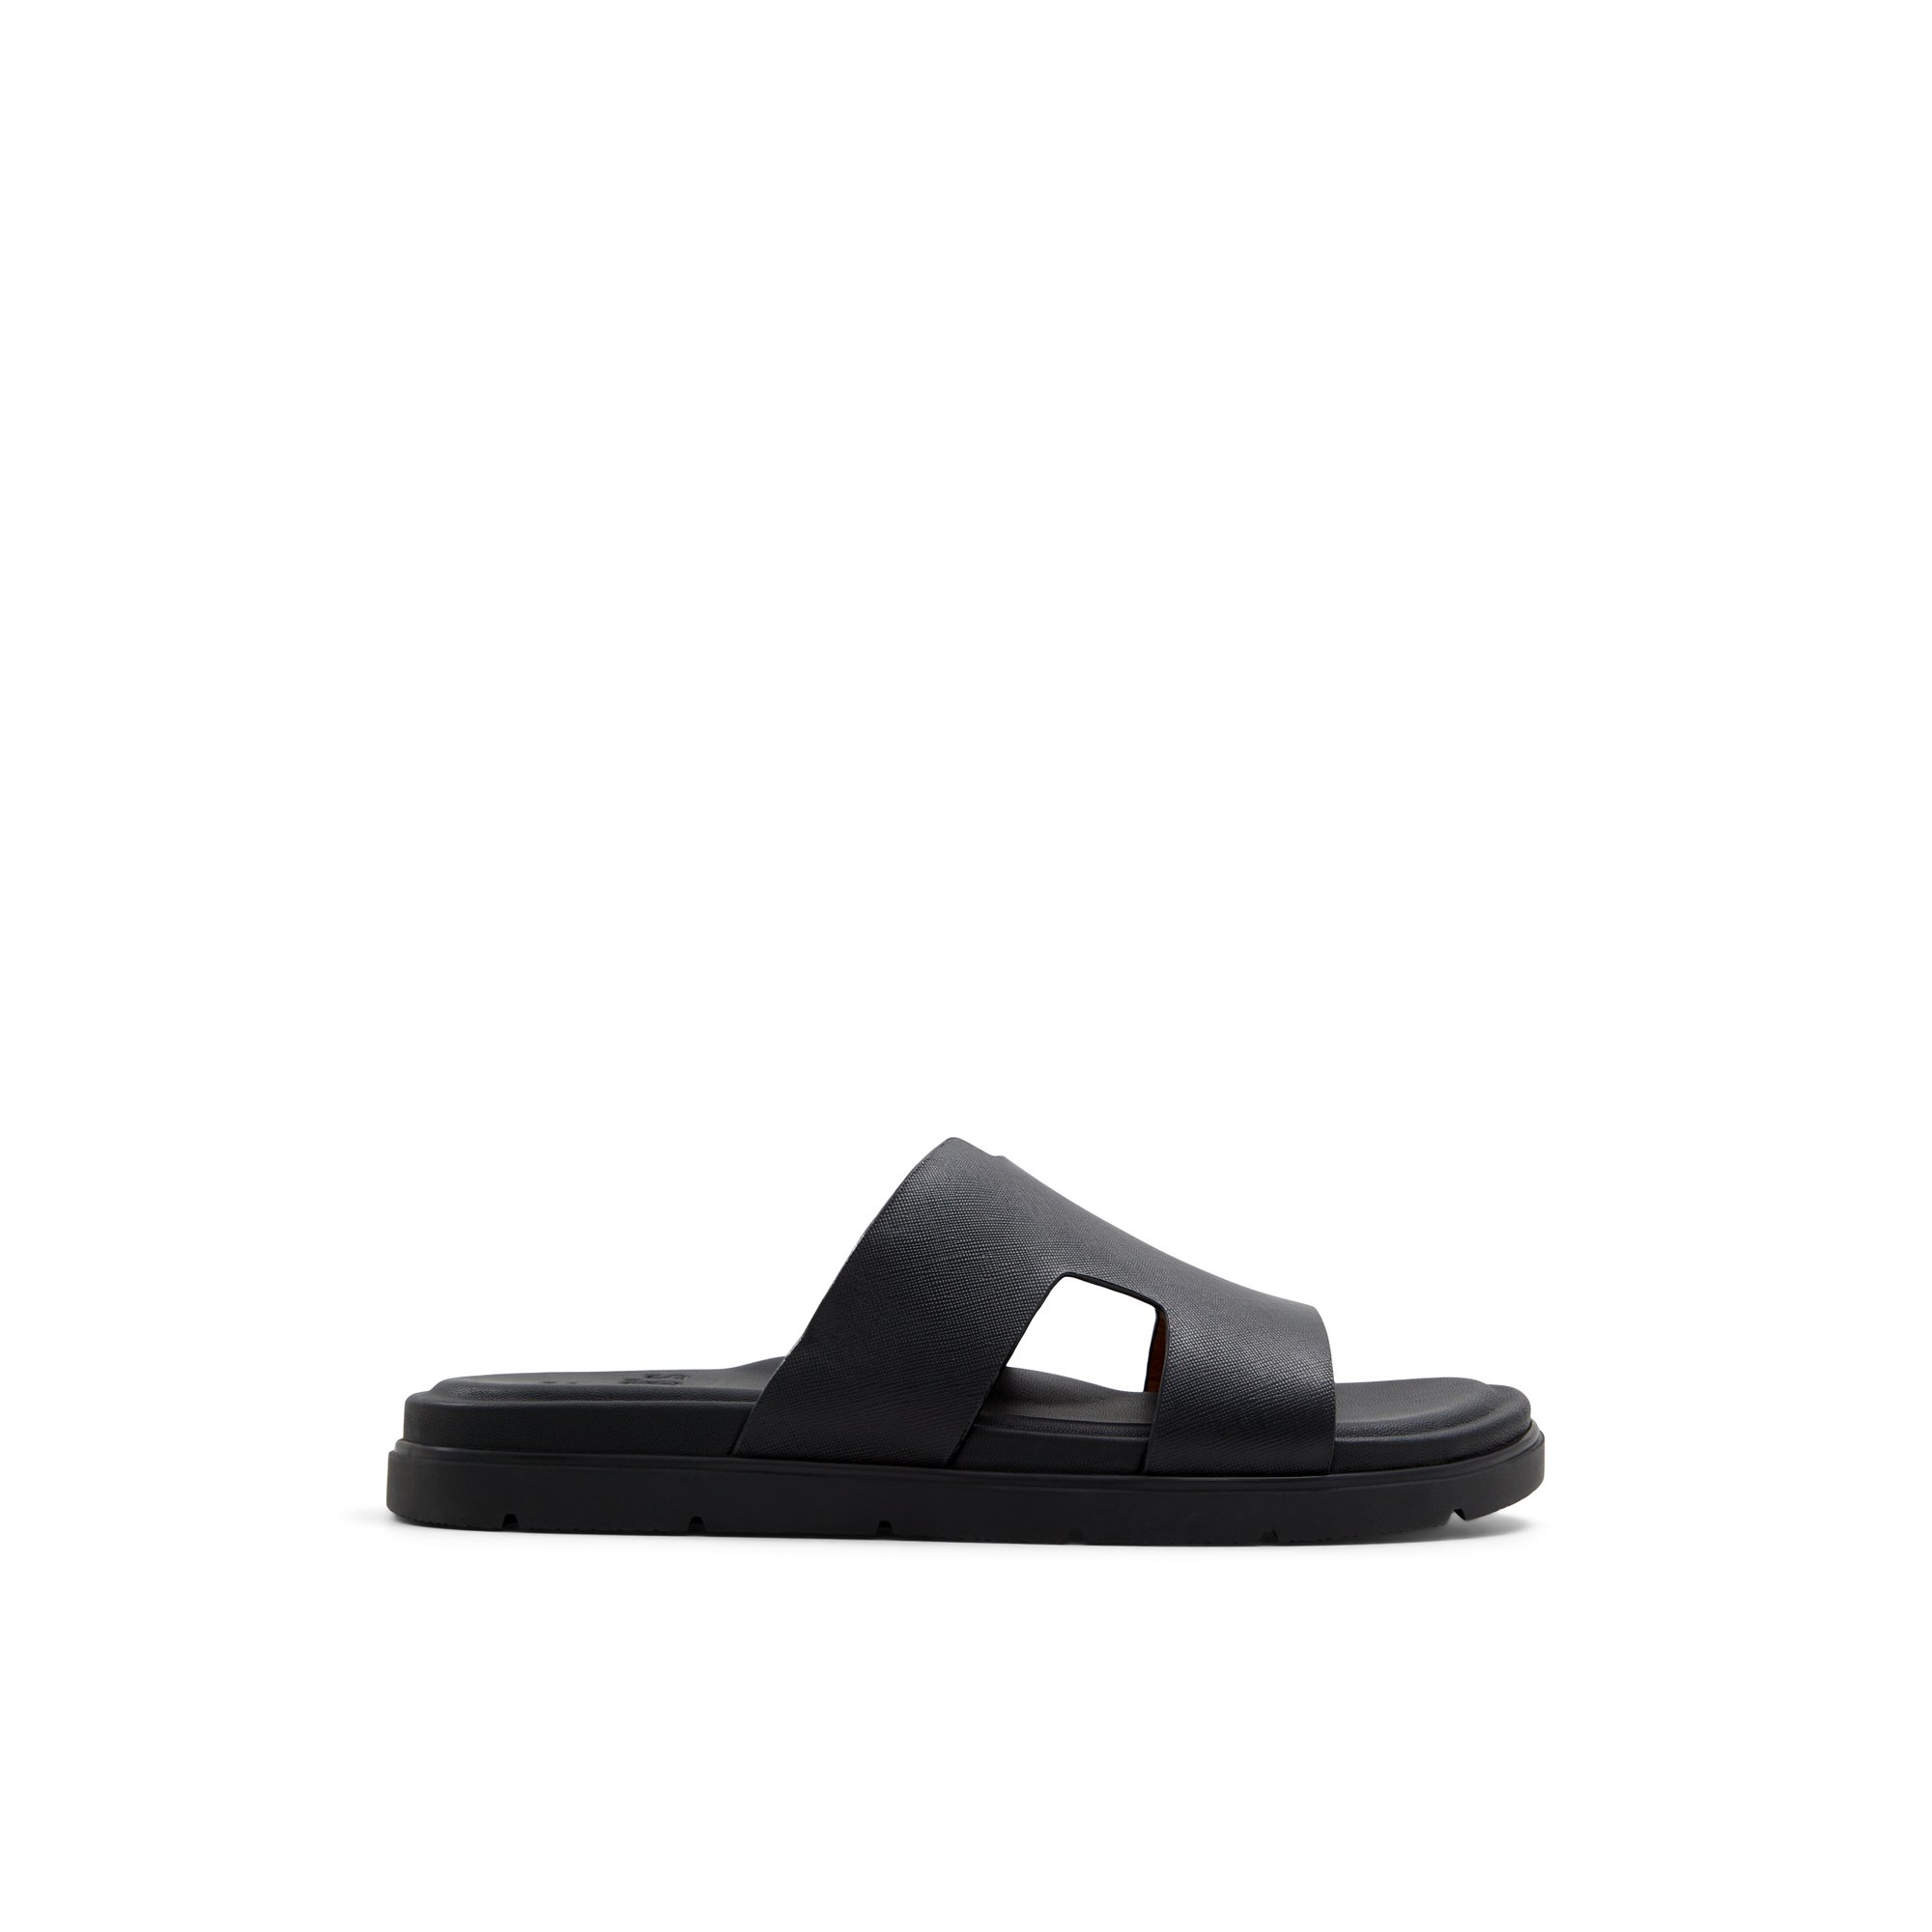 ALDO Chano - Men's Sandals - Black